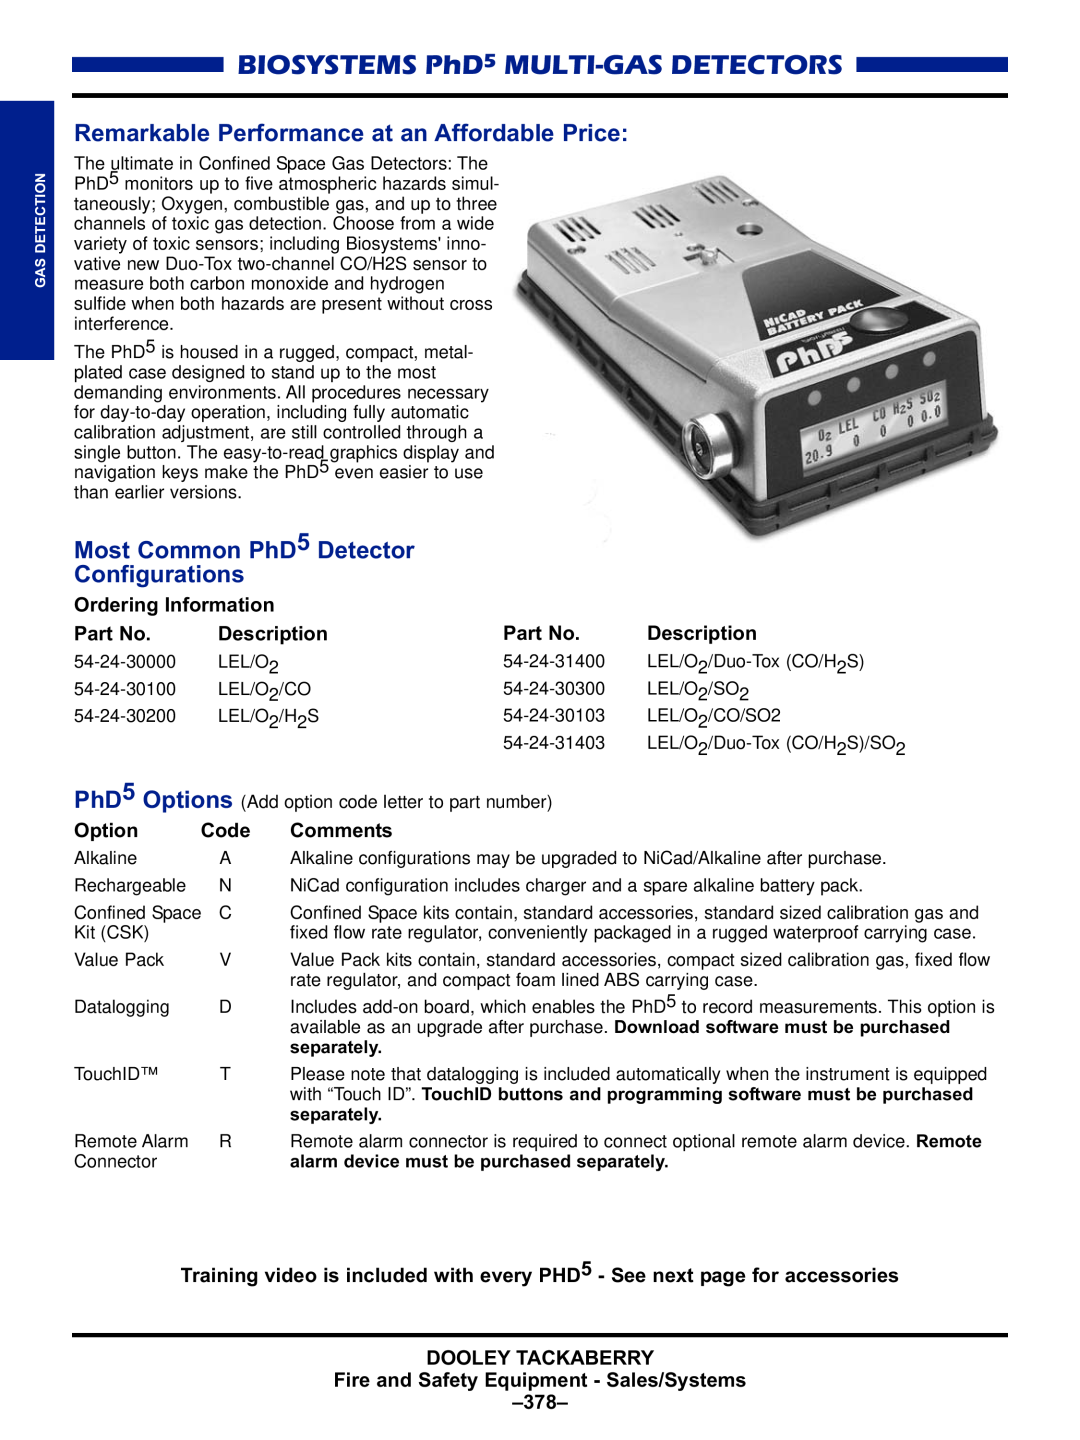 Black & Decker MULTI-GAS DETECTORS manual BIOSYSTEMS PhD5 MULTI-GASDETECTORS, Remarkable Performance at an Affordable Price 